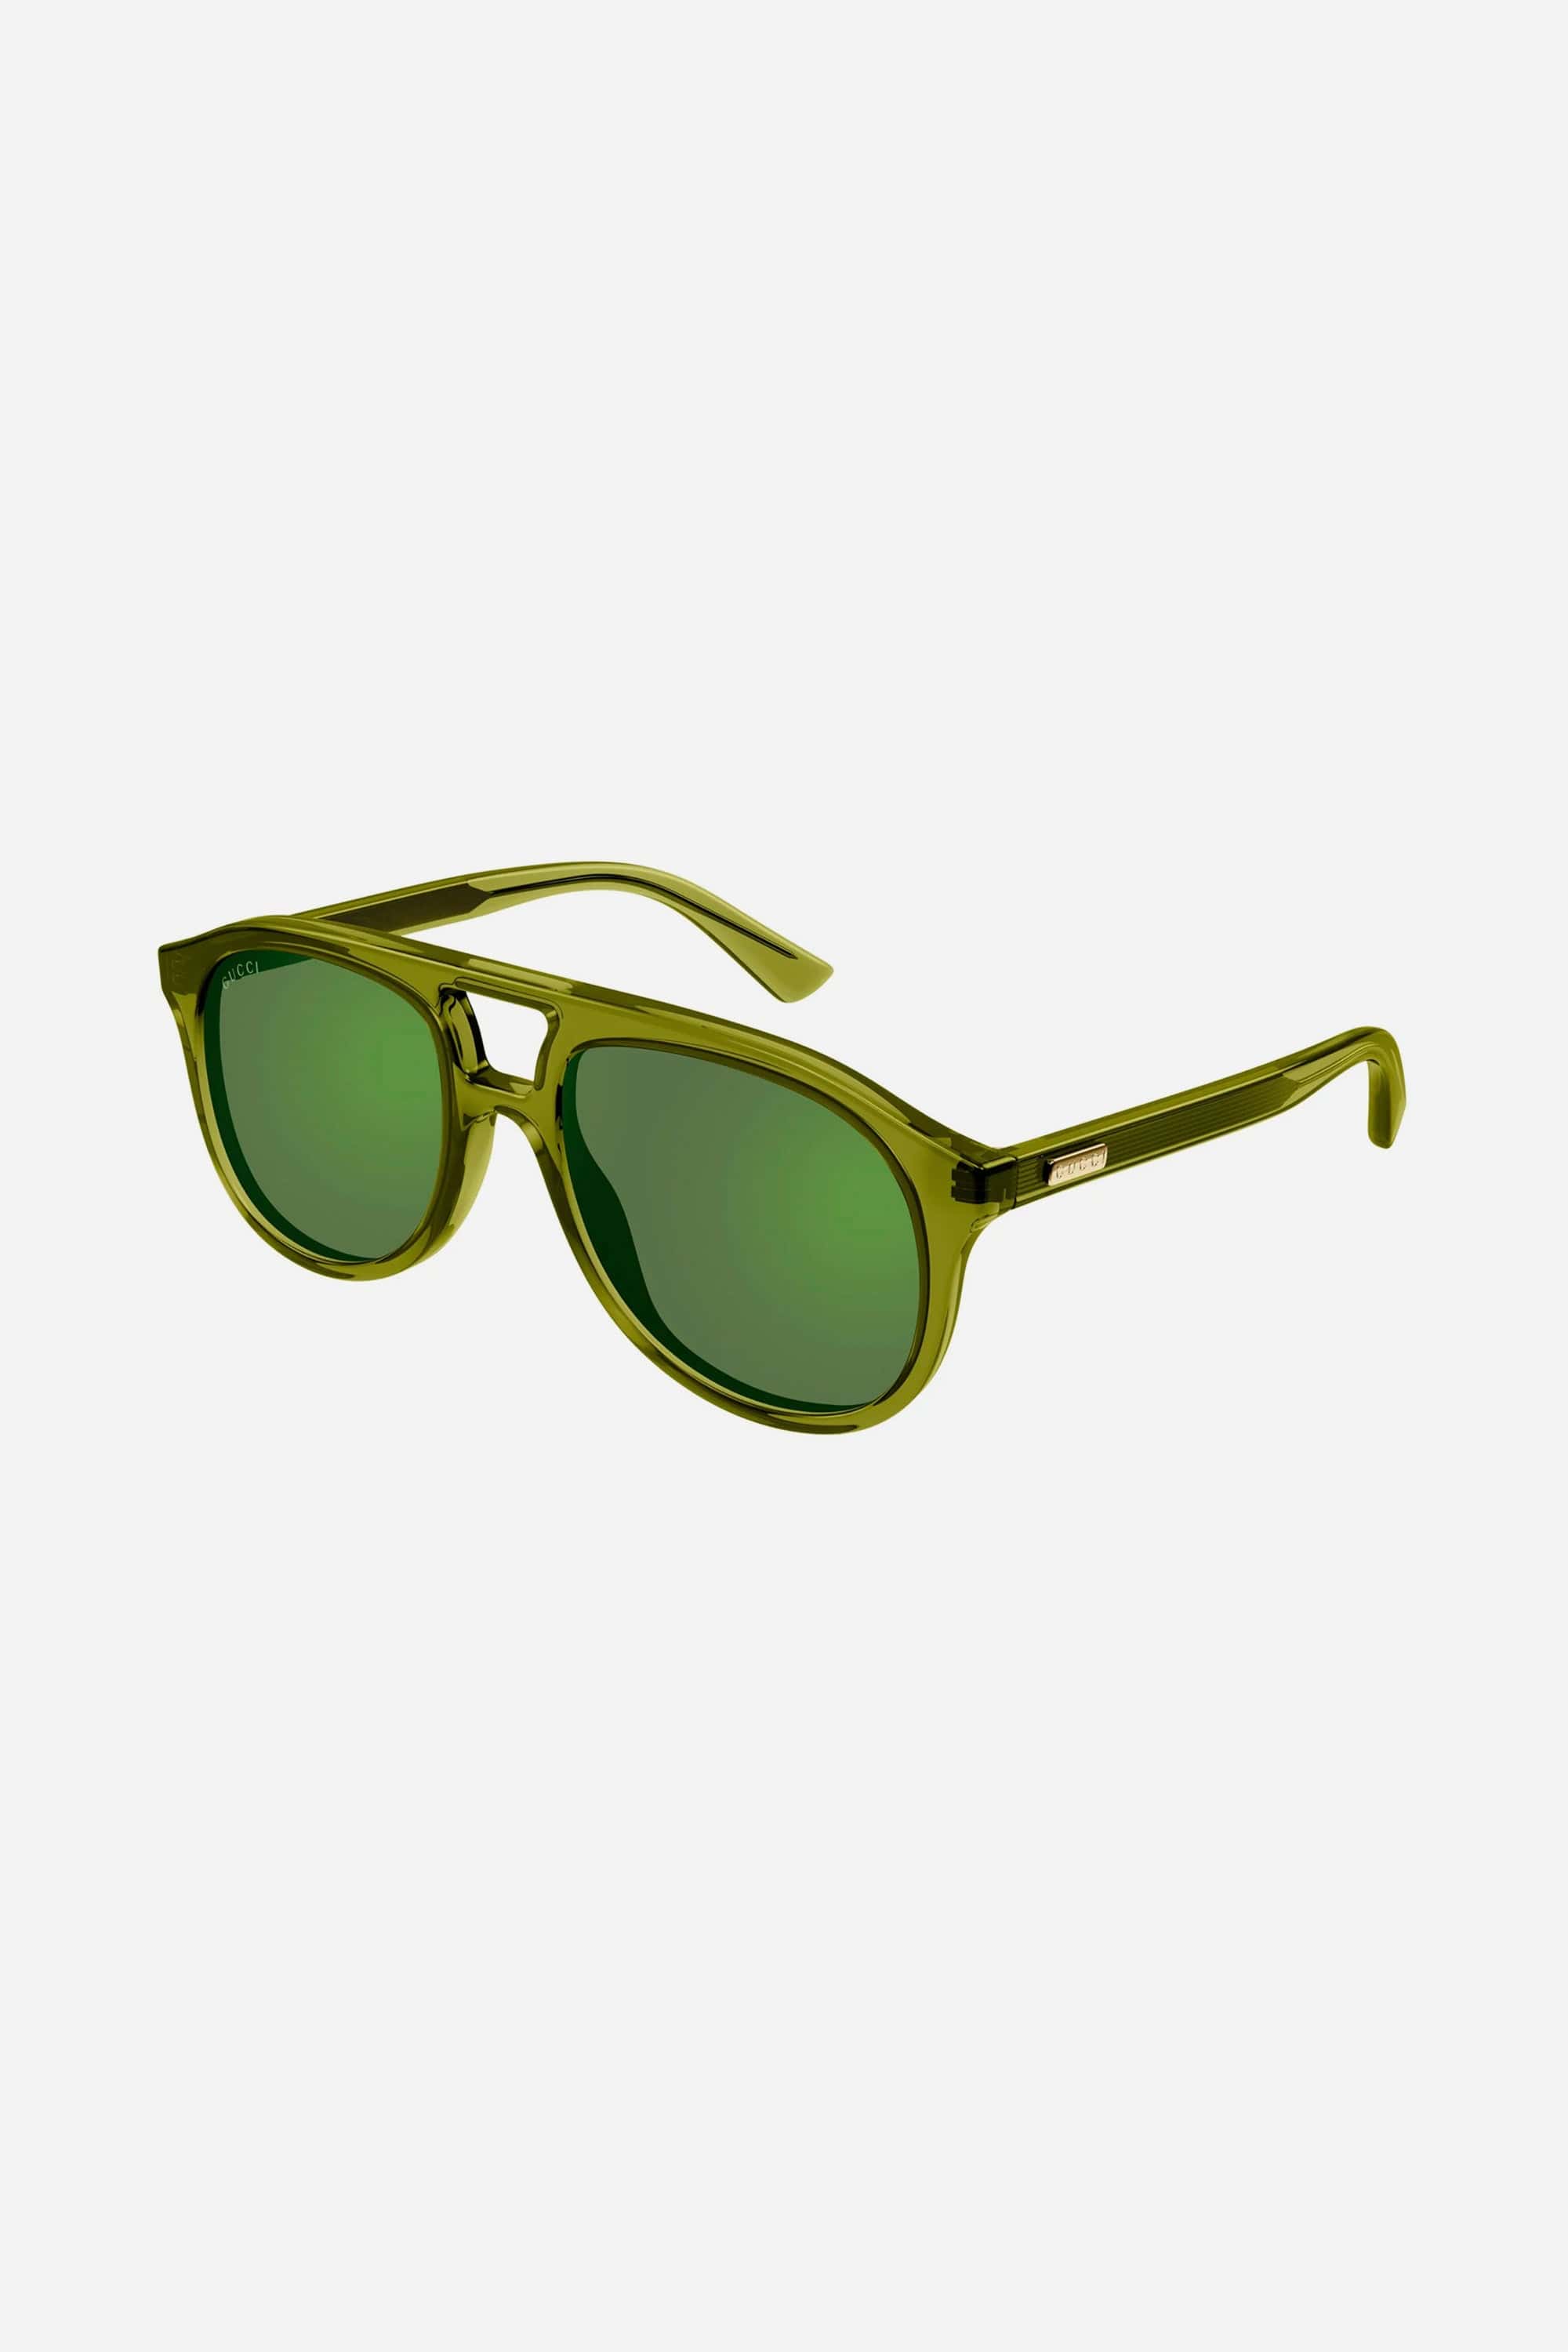 Gucci GG1320s pilot green sunglasses - Eyewear Club